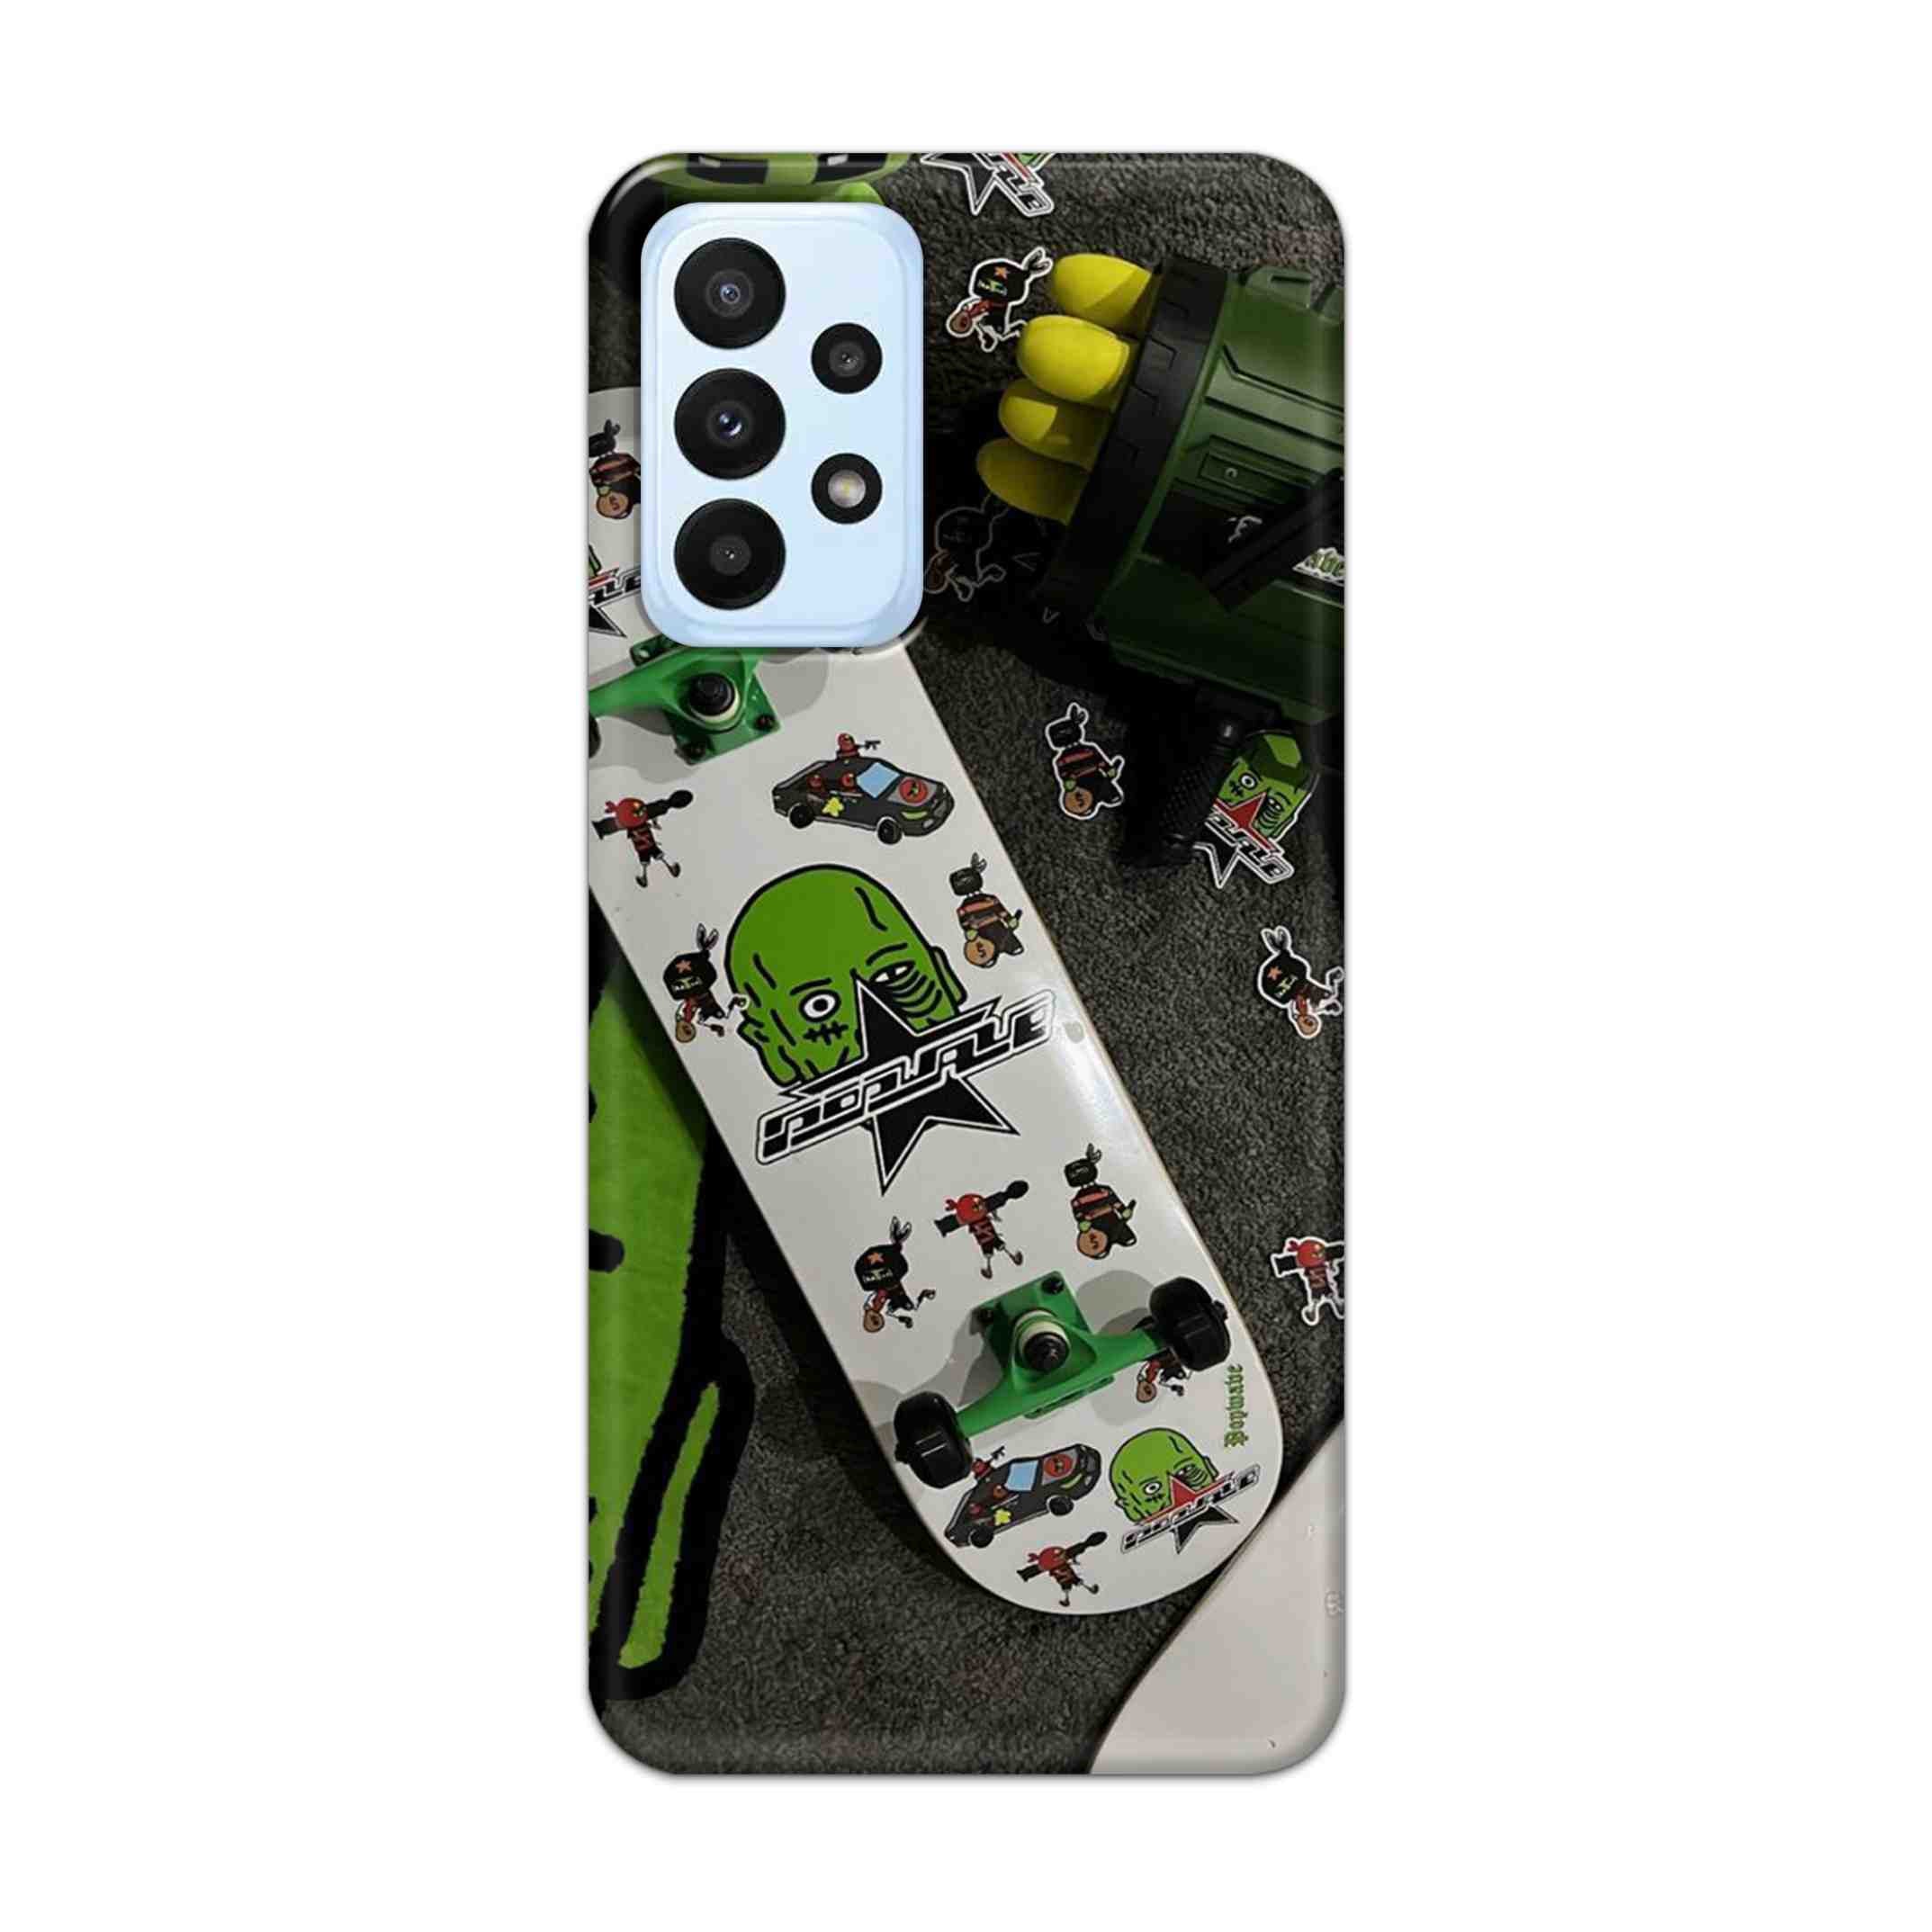 Buy Hulk Skateboard Hard Back Mobile Phone Case Cover For Samsung A23 Online